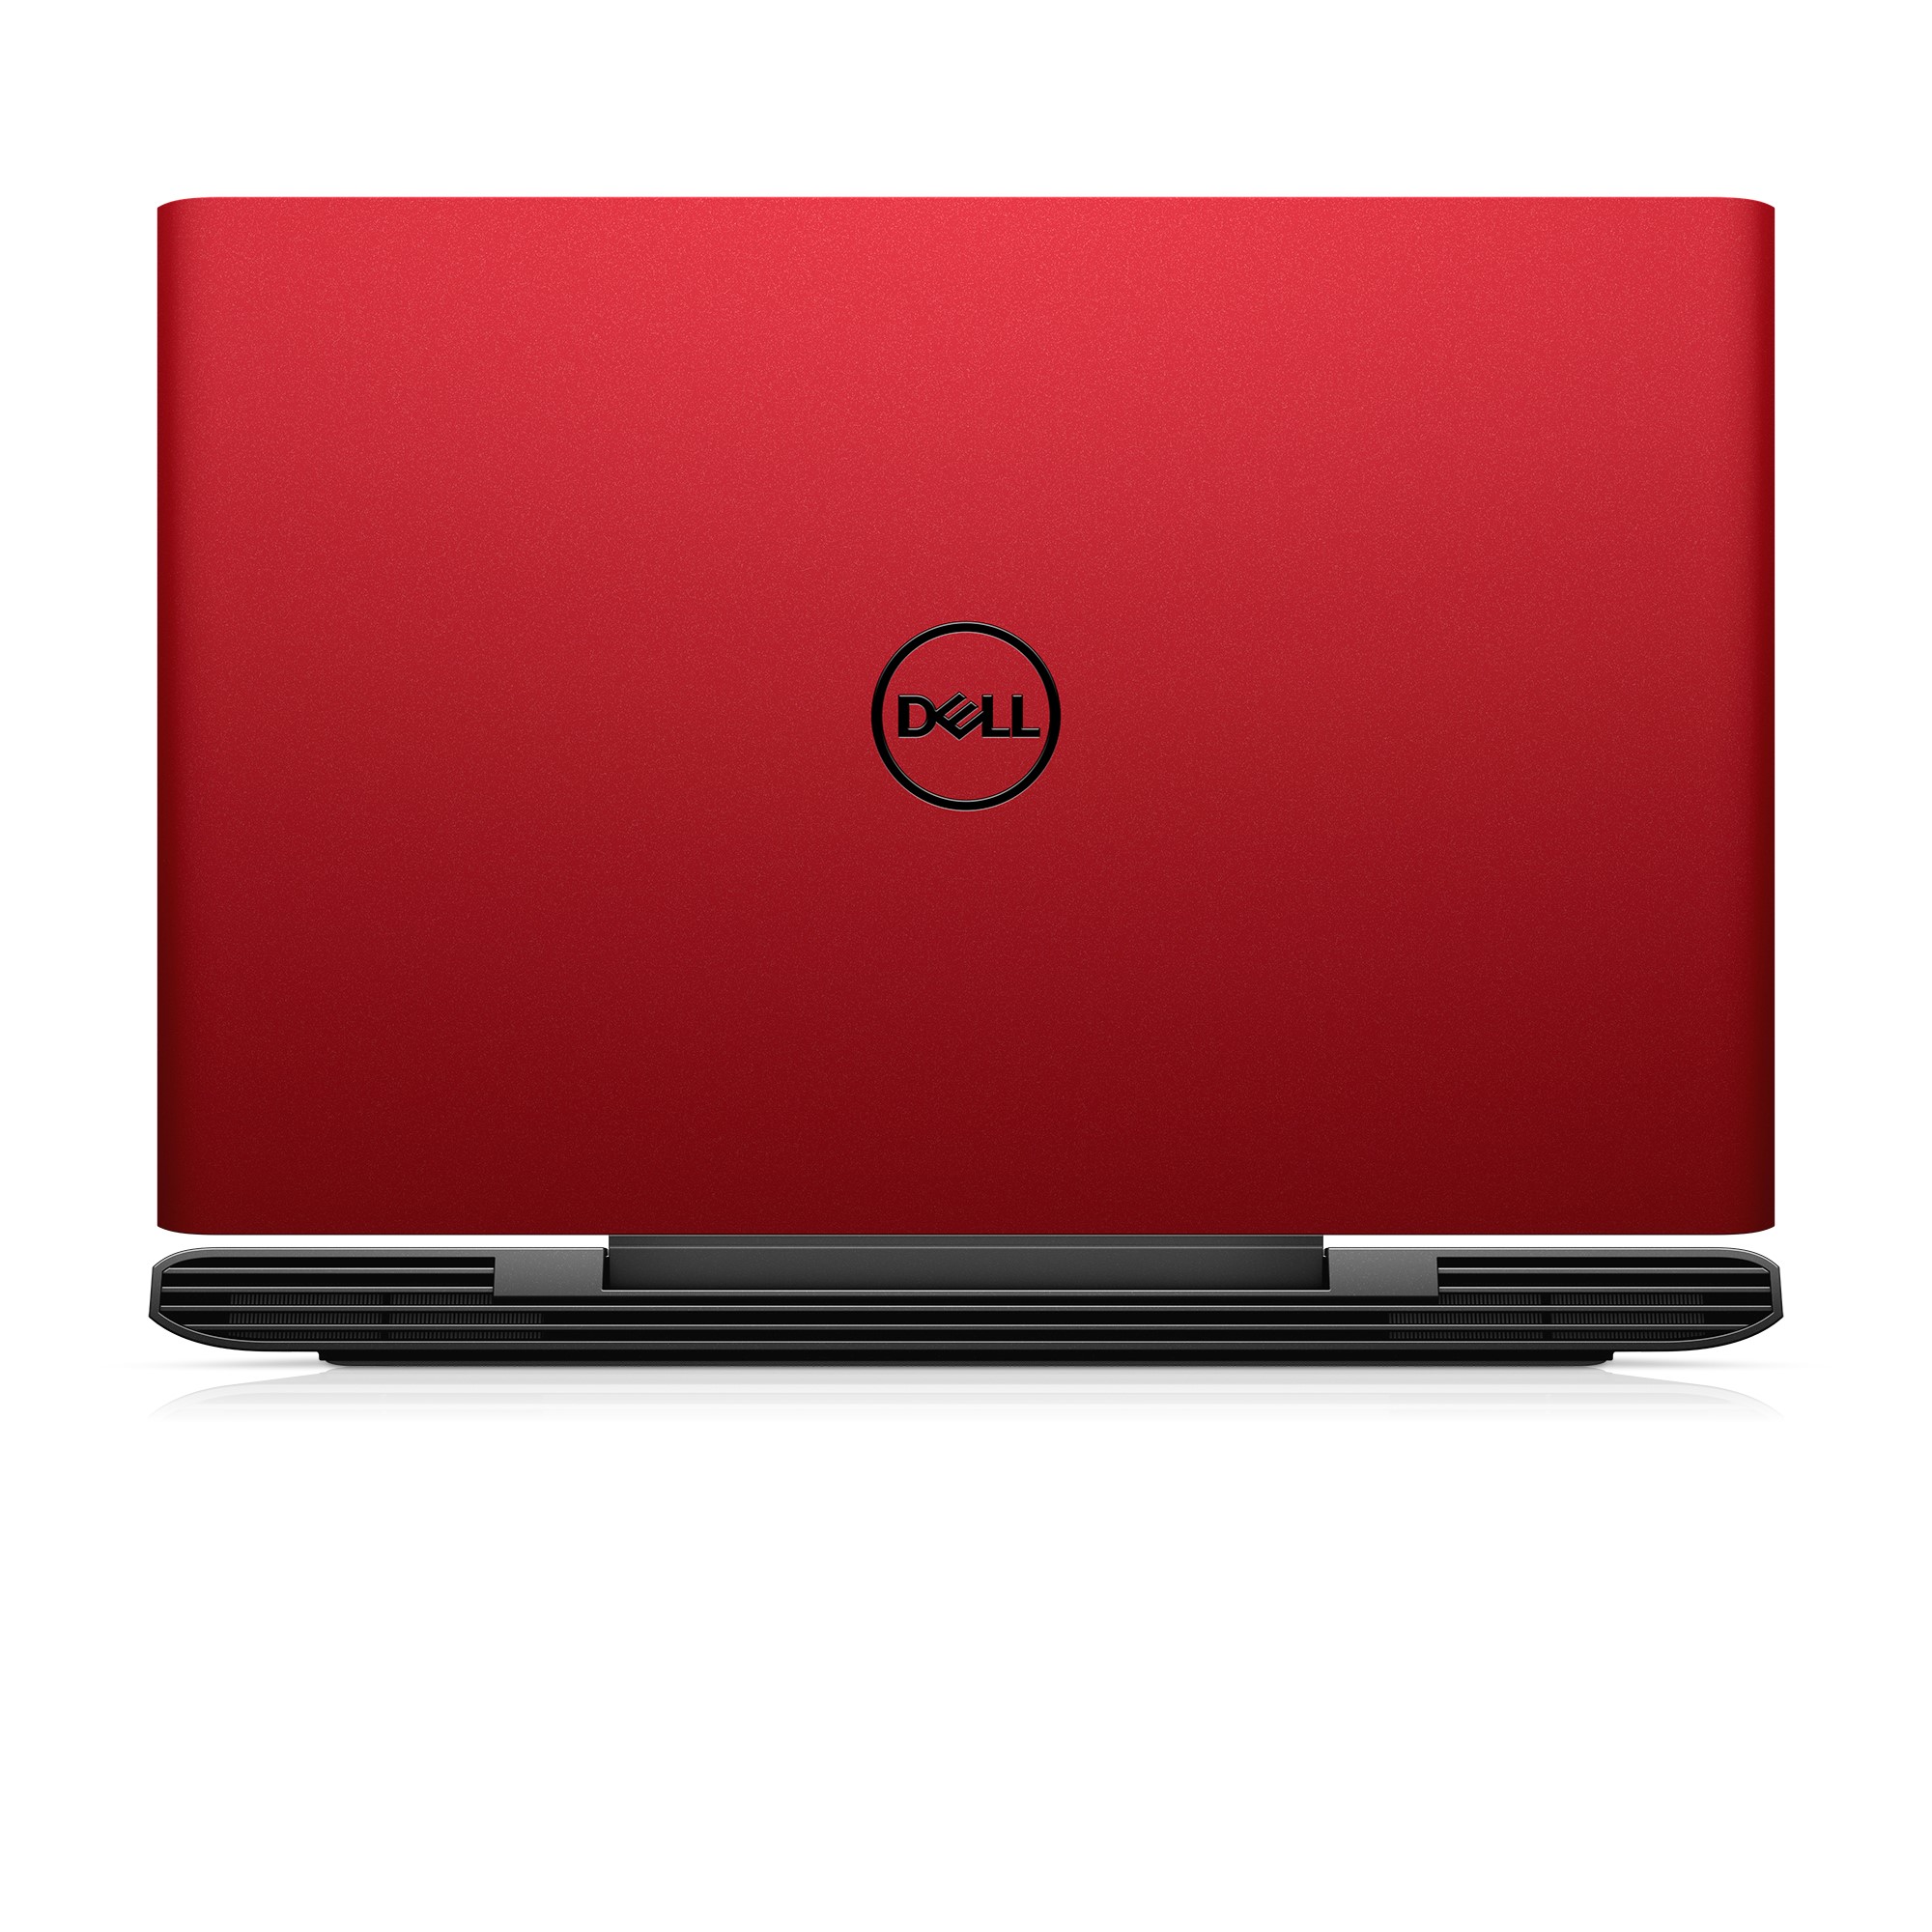 Dell G5 Gaming Laptop 15.6" Full HD, Intel Core i7-8750H, NVIDIA GeForce GTX 1050 Ti 4GB, 1TB HDD + 128GB SSD Storage, 8GB RAM, G5587-7037RED-PUS - image 5 of 6